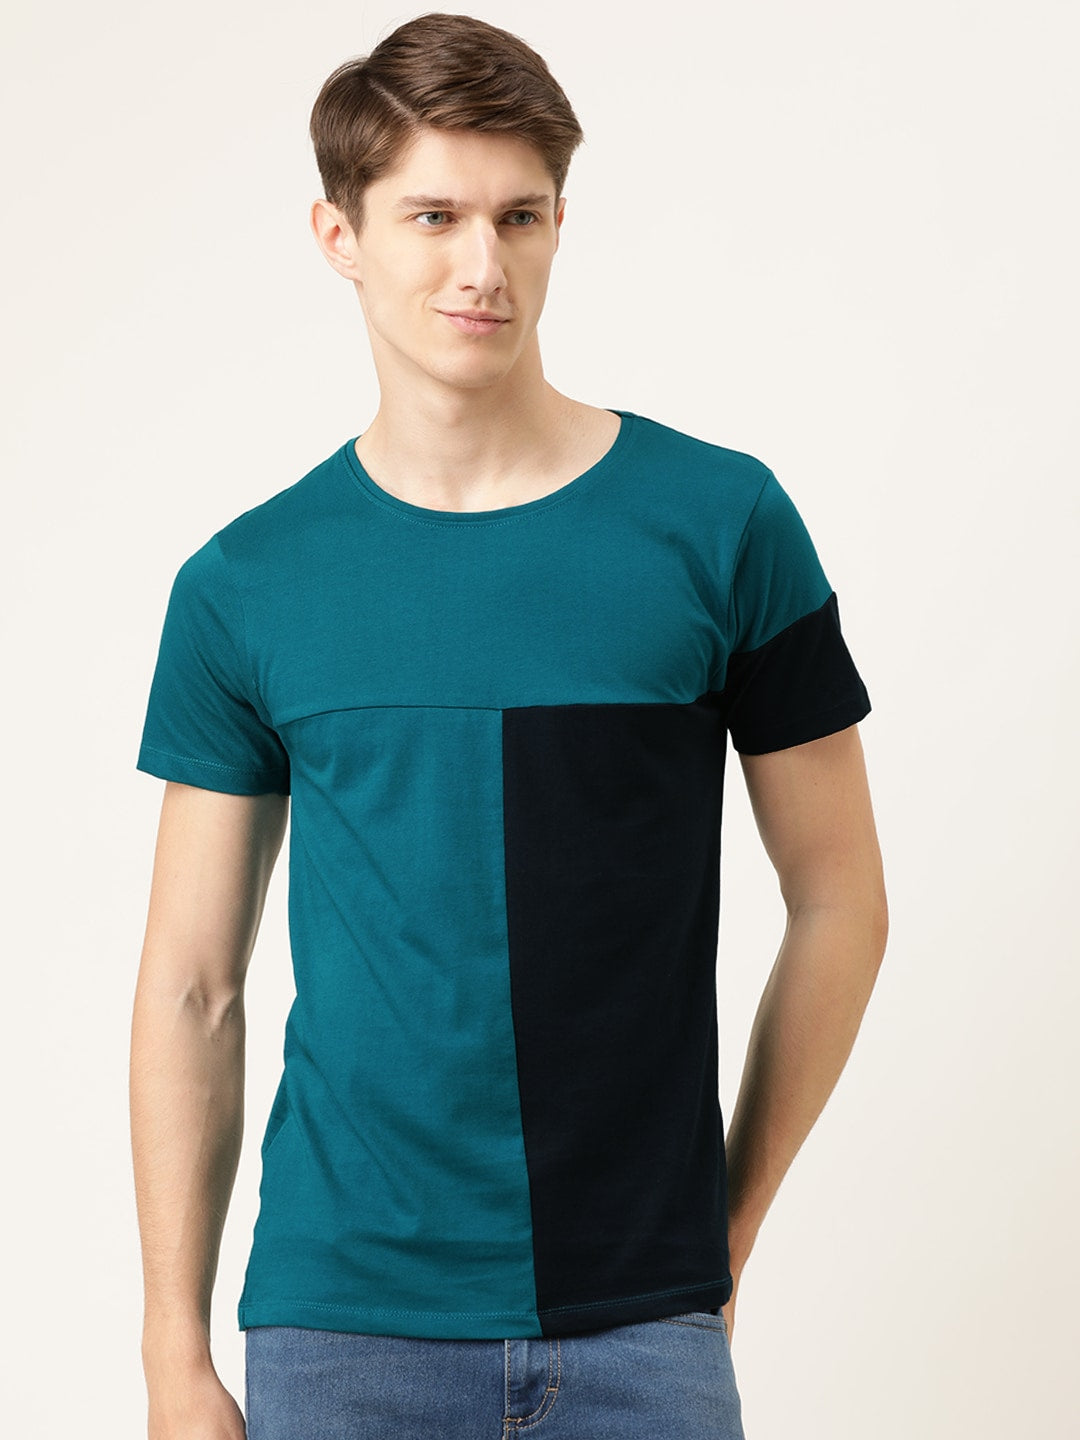 Shop Men Solid T-Shirt Online.